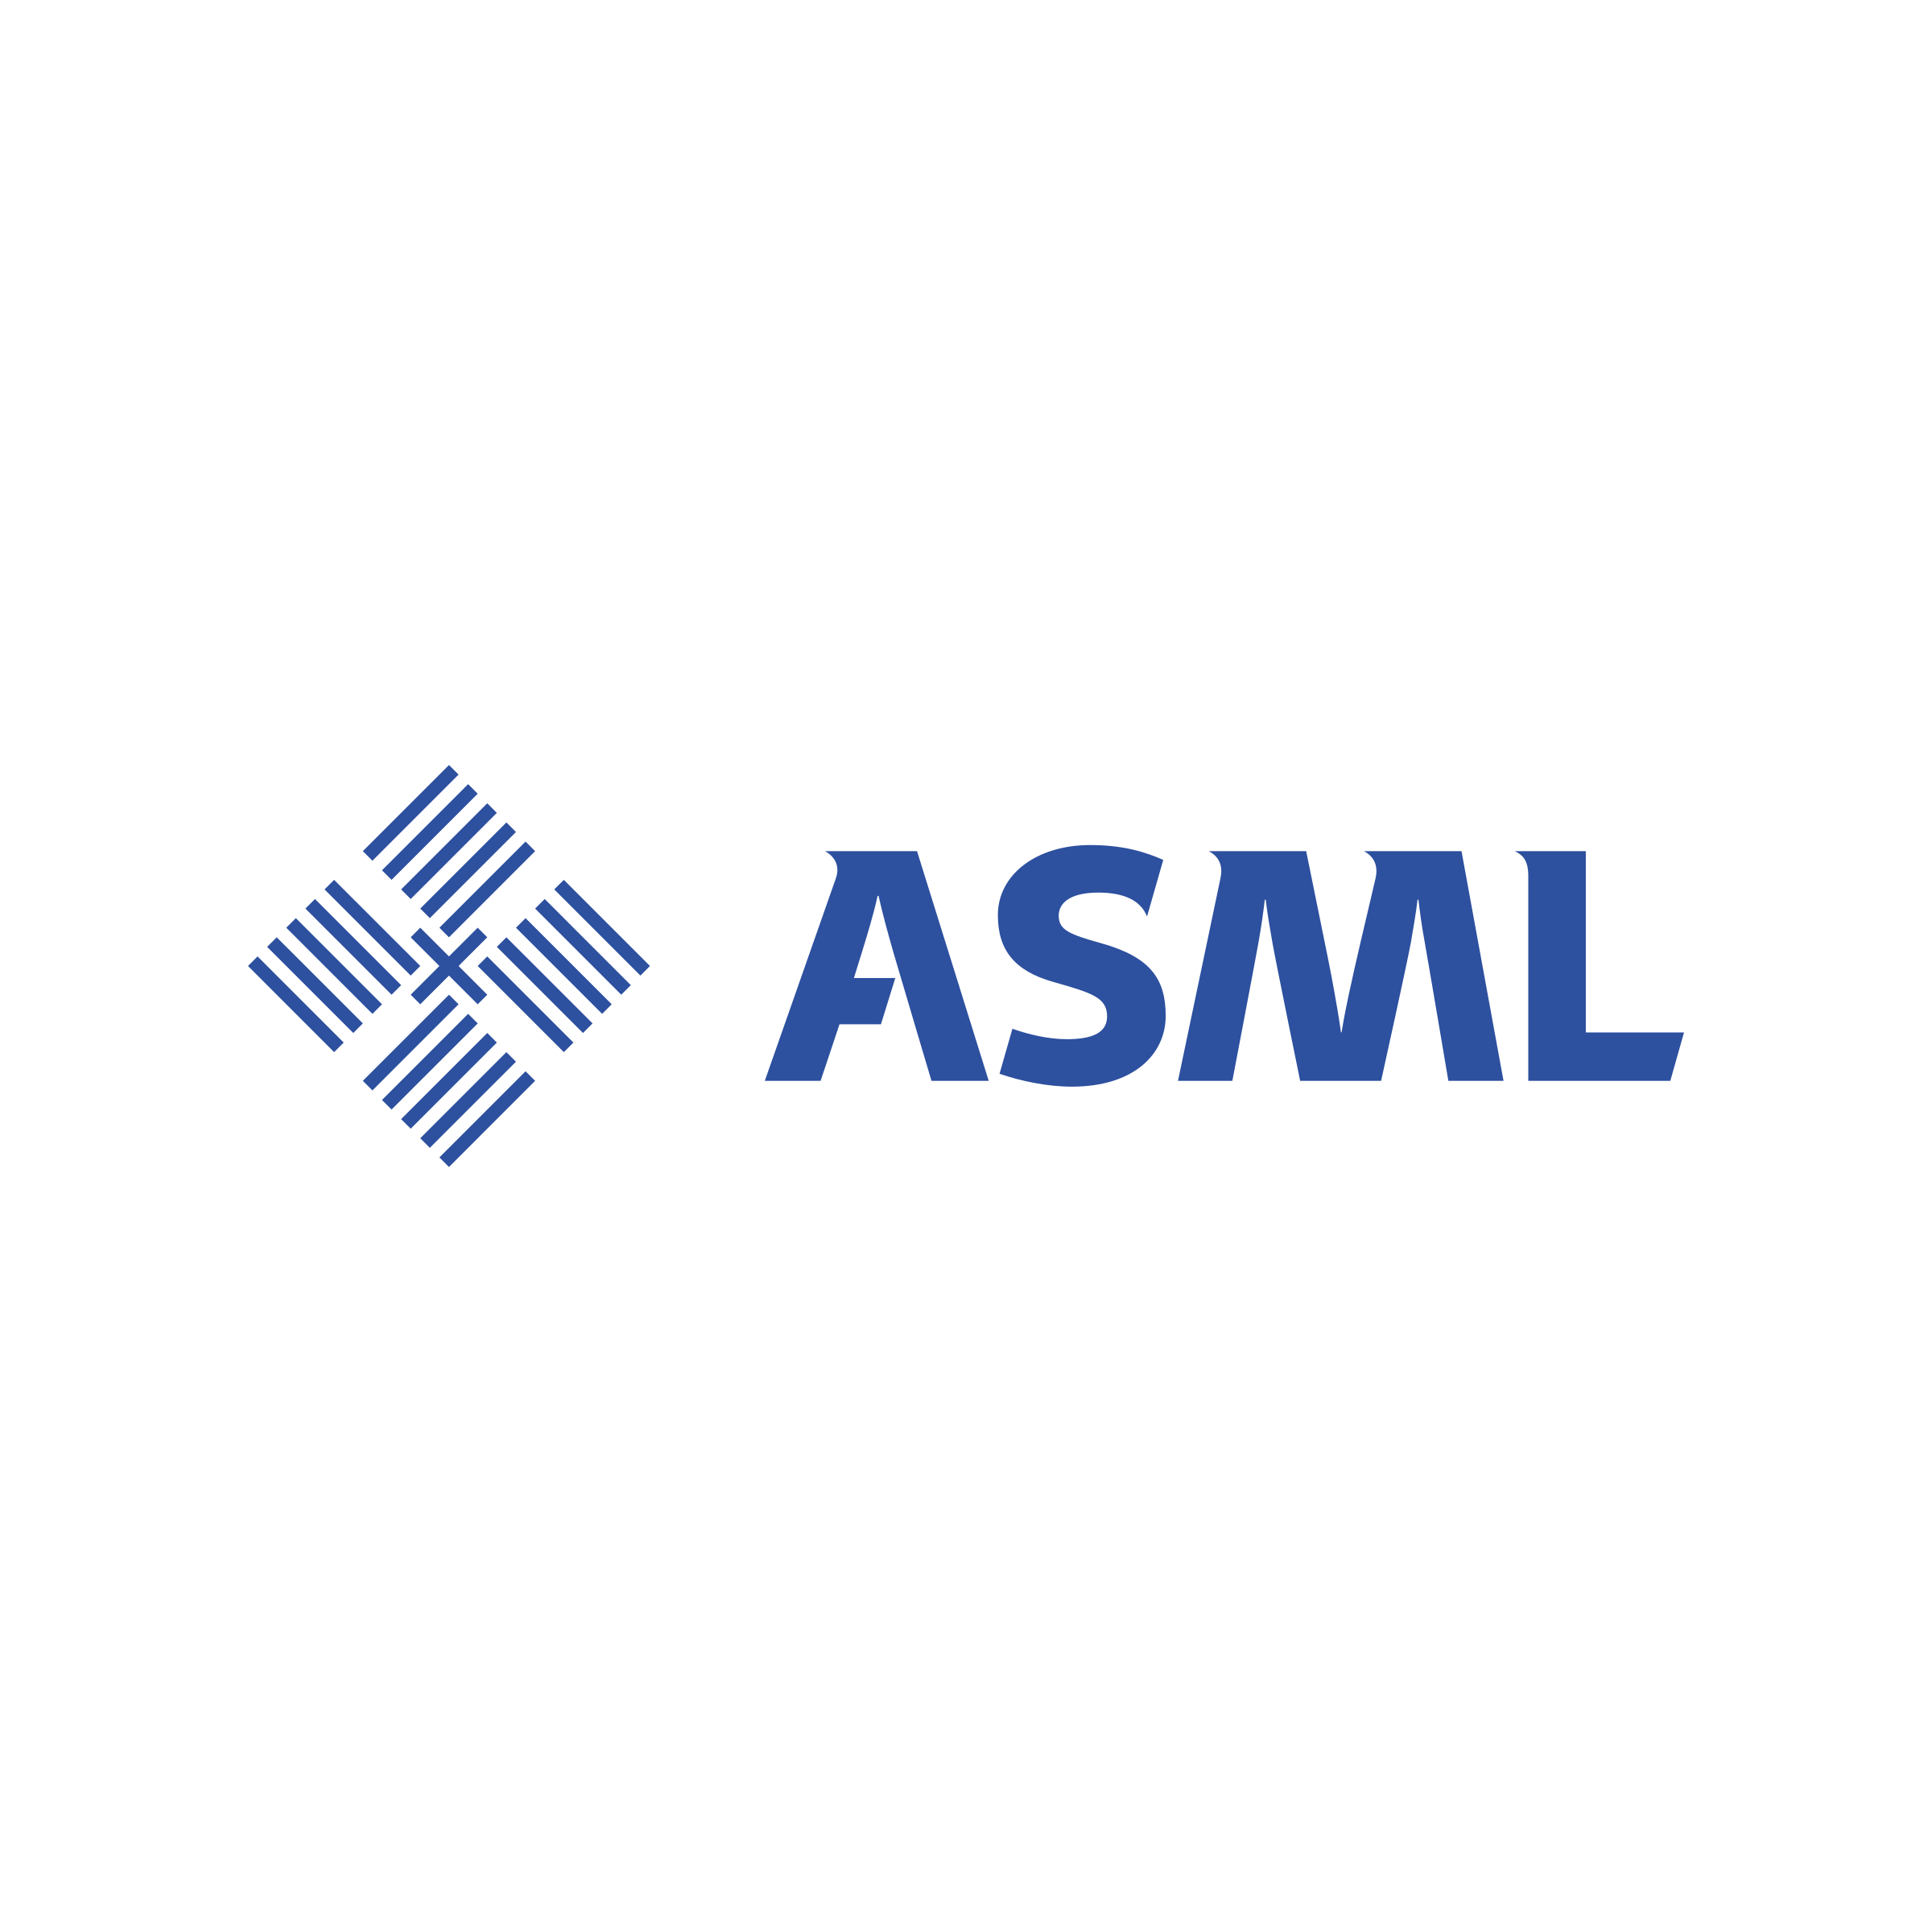 ASML Logo - ASML Logo PNG Transparent & SVG Vector - Freebie Supply